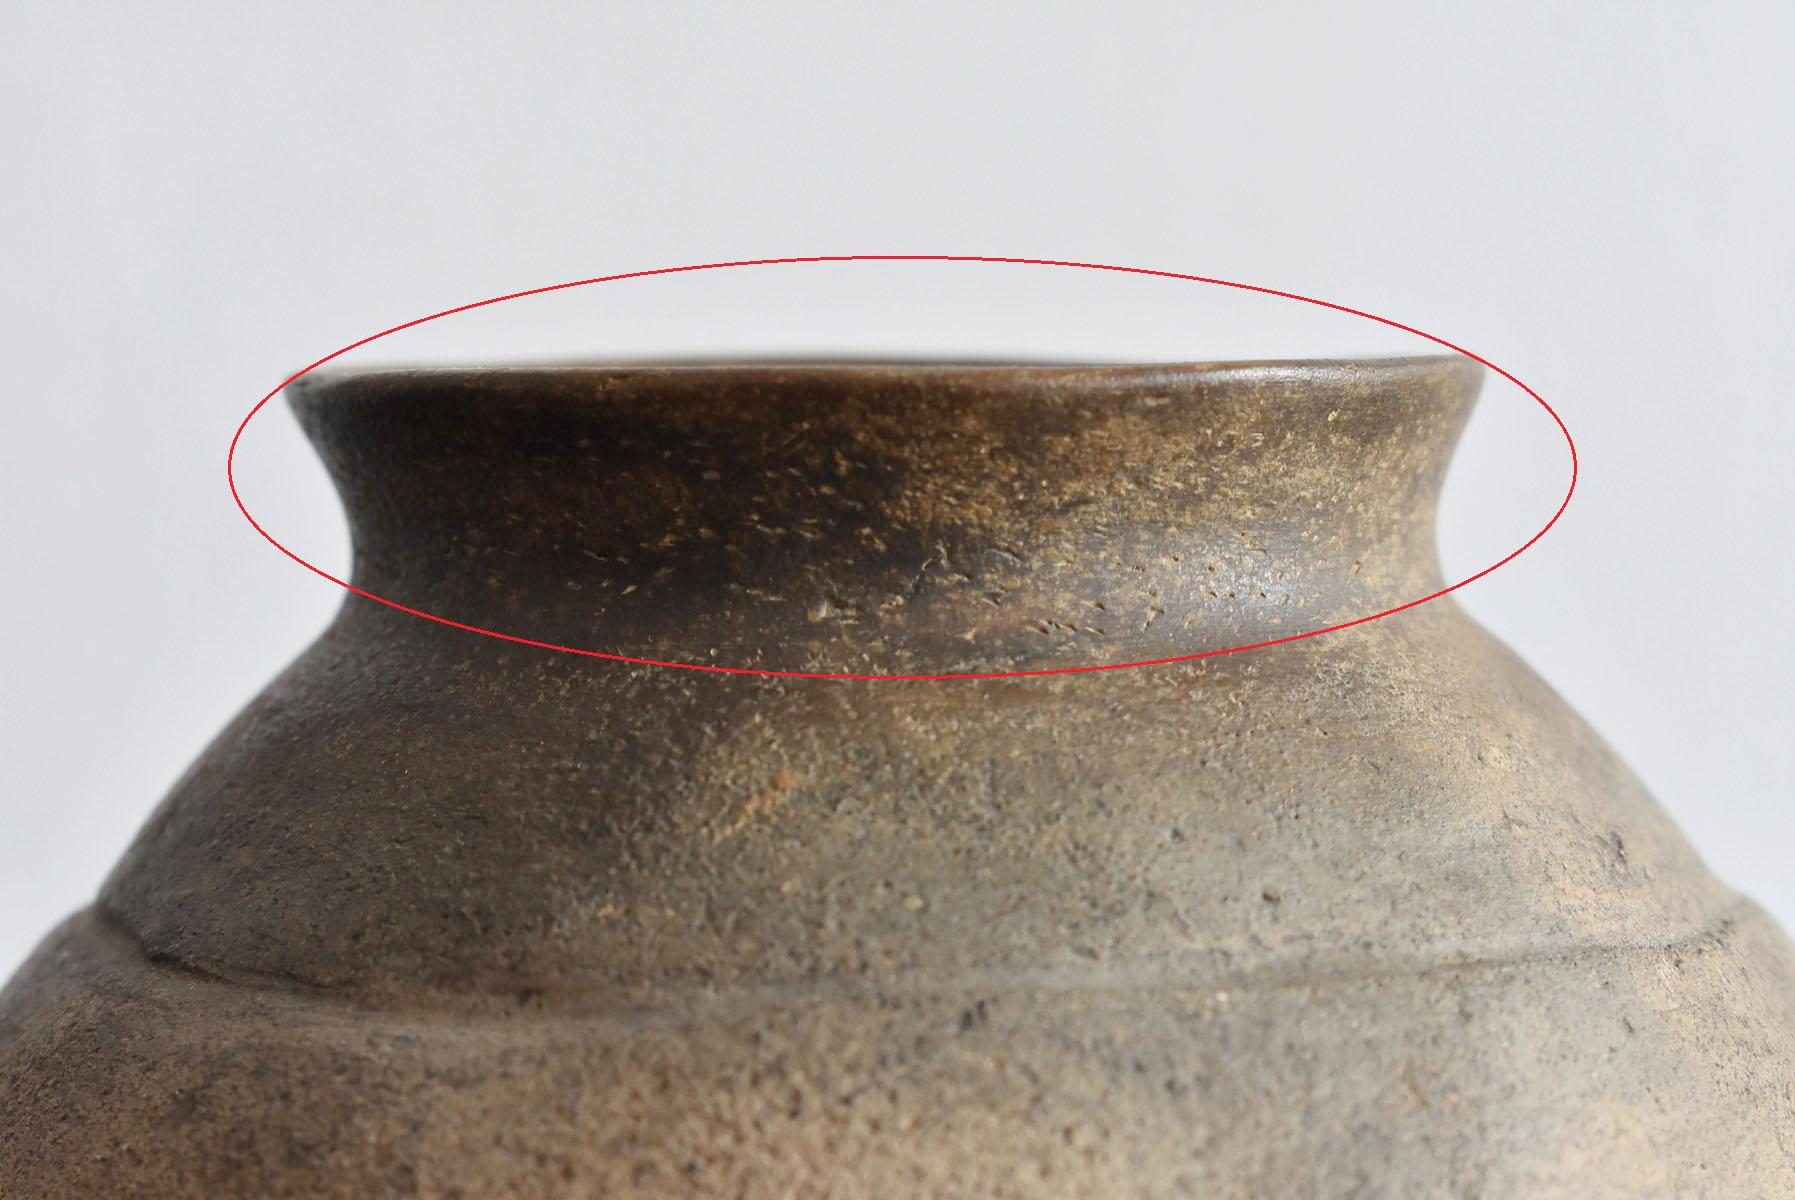 18th Century and Earlier Japanese Ancient Small Jar / Jomon Pottery / 3000 Years ago / Wabi-Sabi